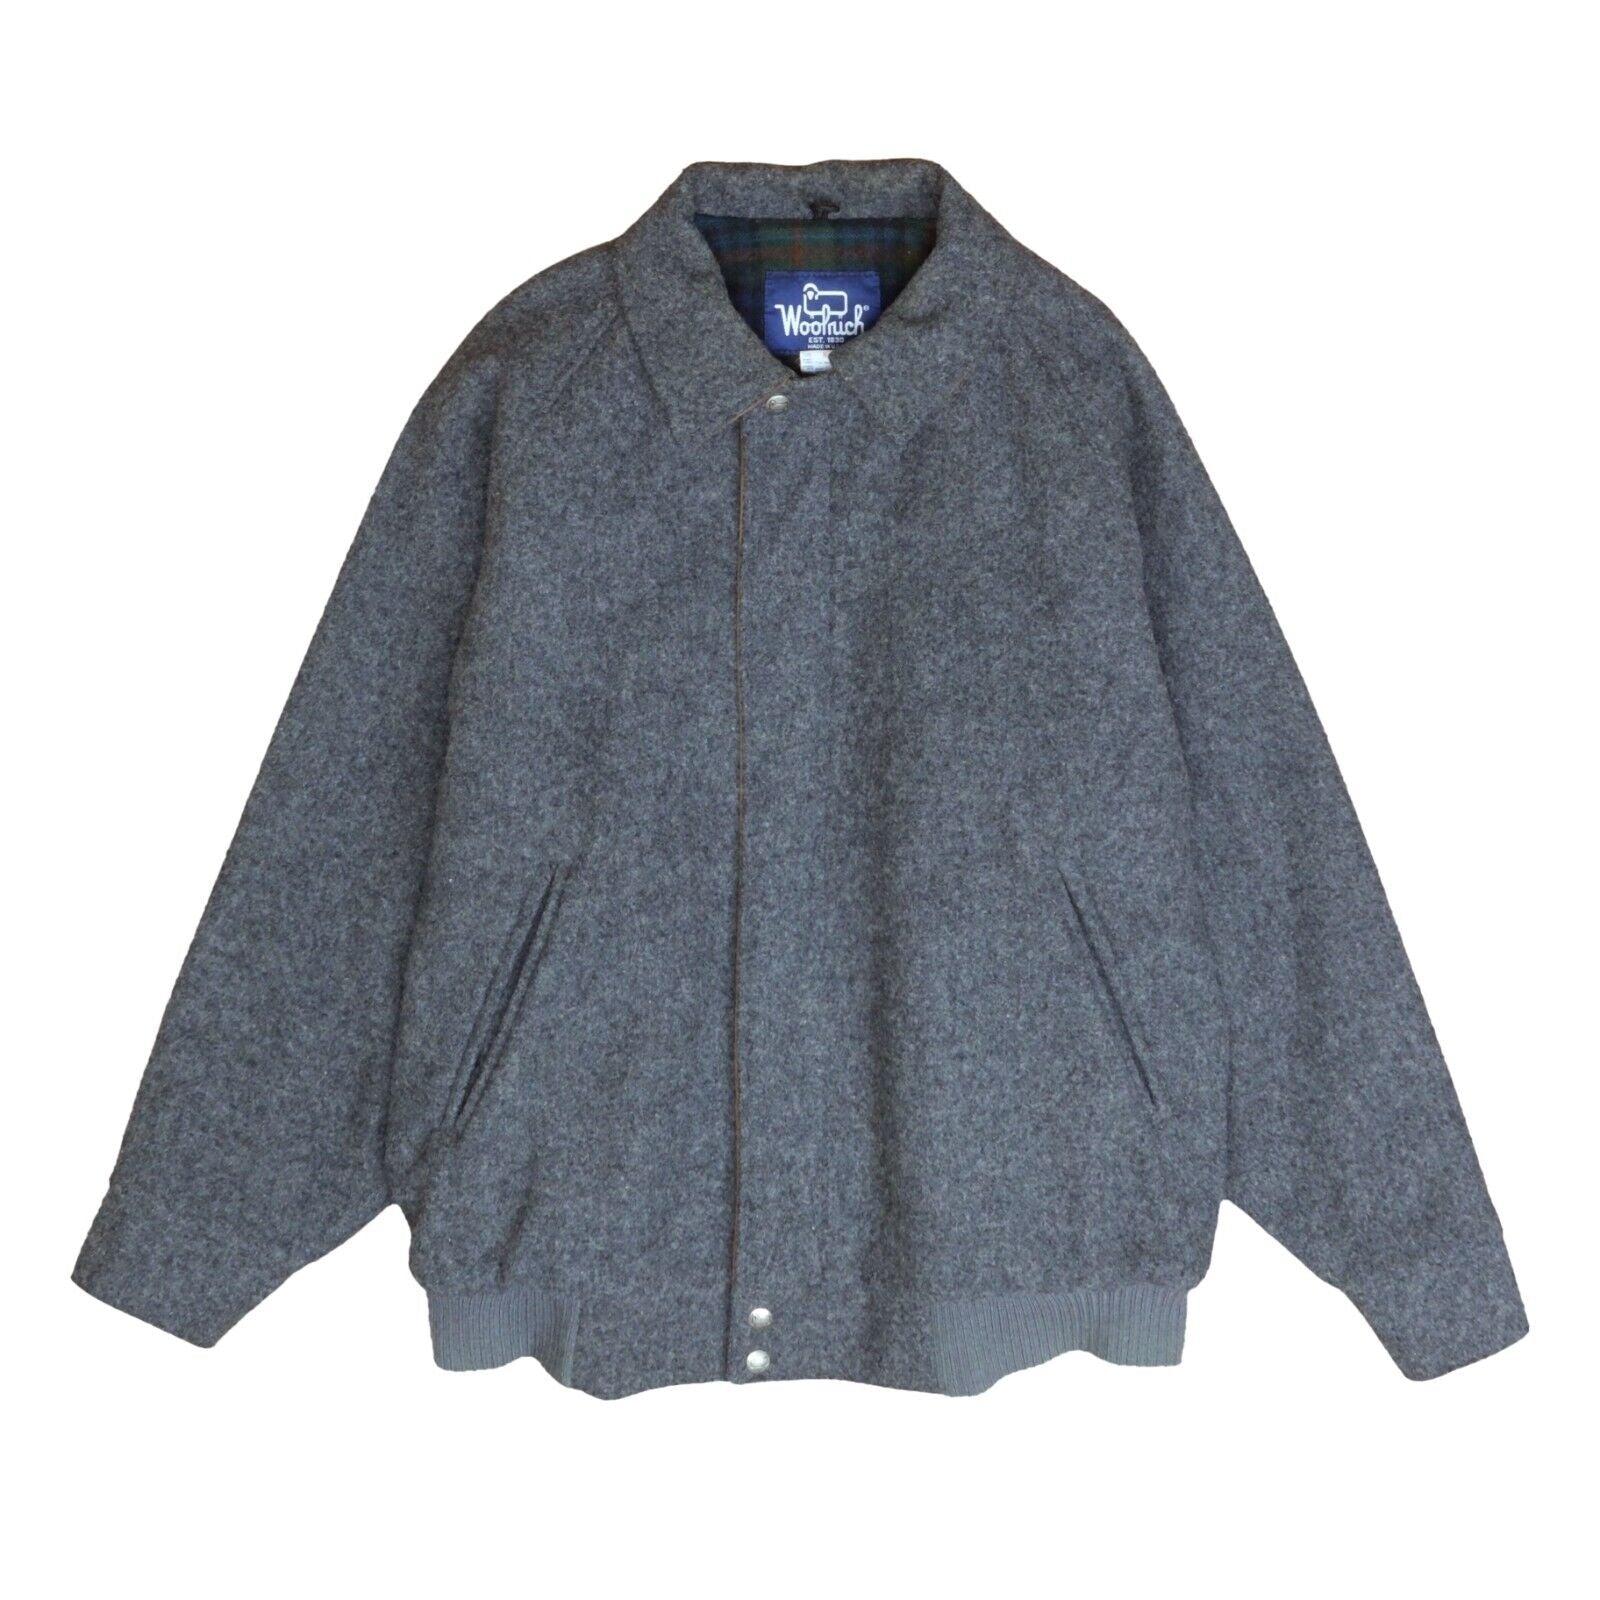 Vintage Woolrich Wool Bomber Jacket Size Medium Gray 70s 80s